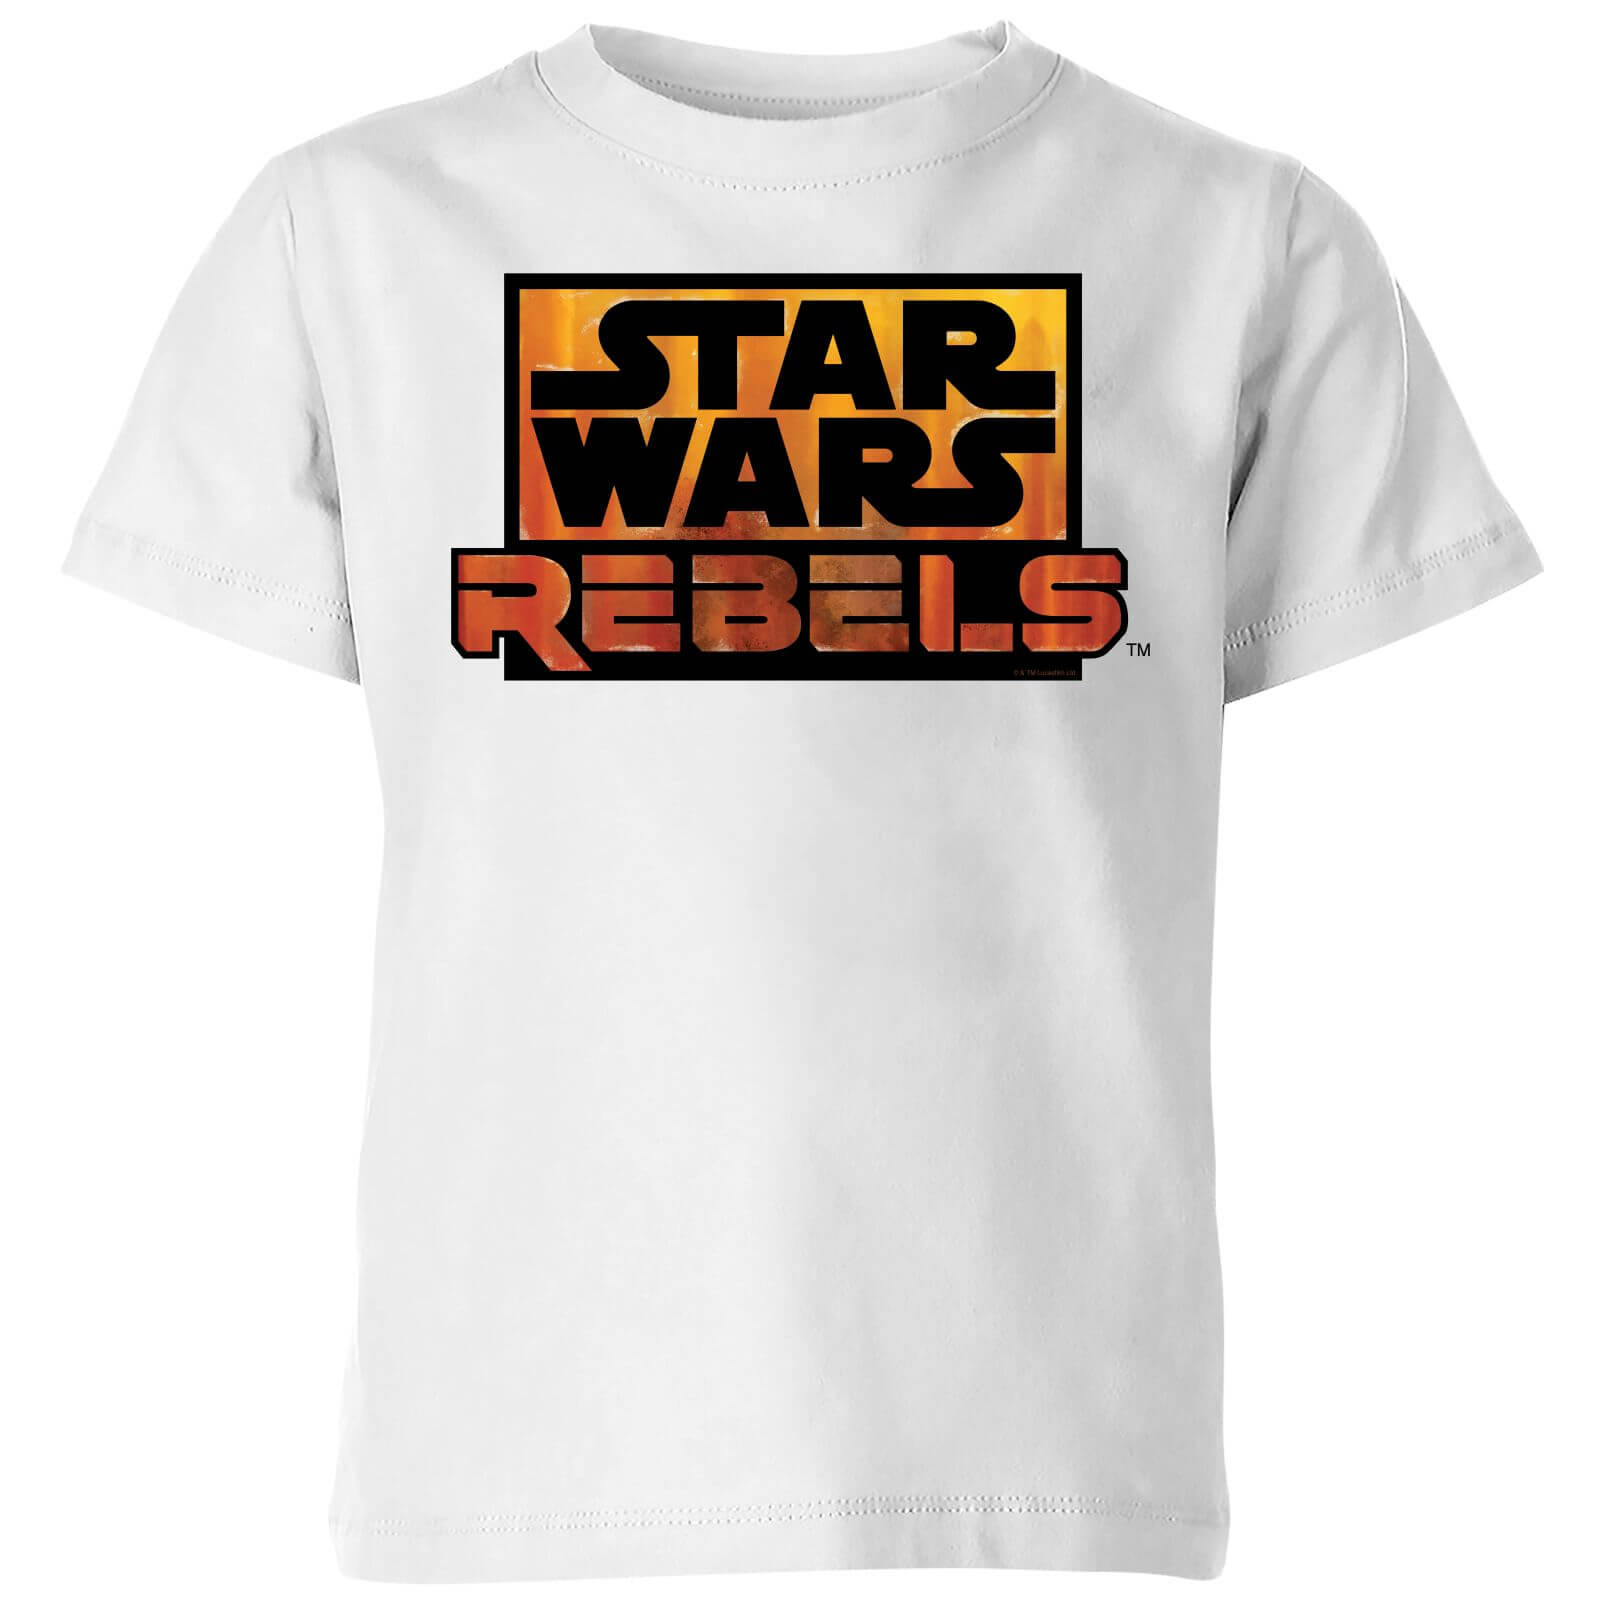 Star Wars Rebels Logo Kids' T-Shirt - White - 9-10 Years - White